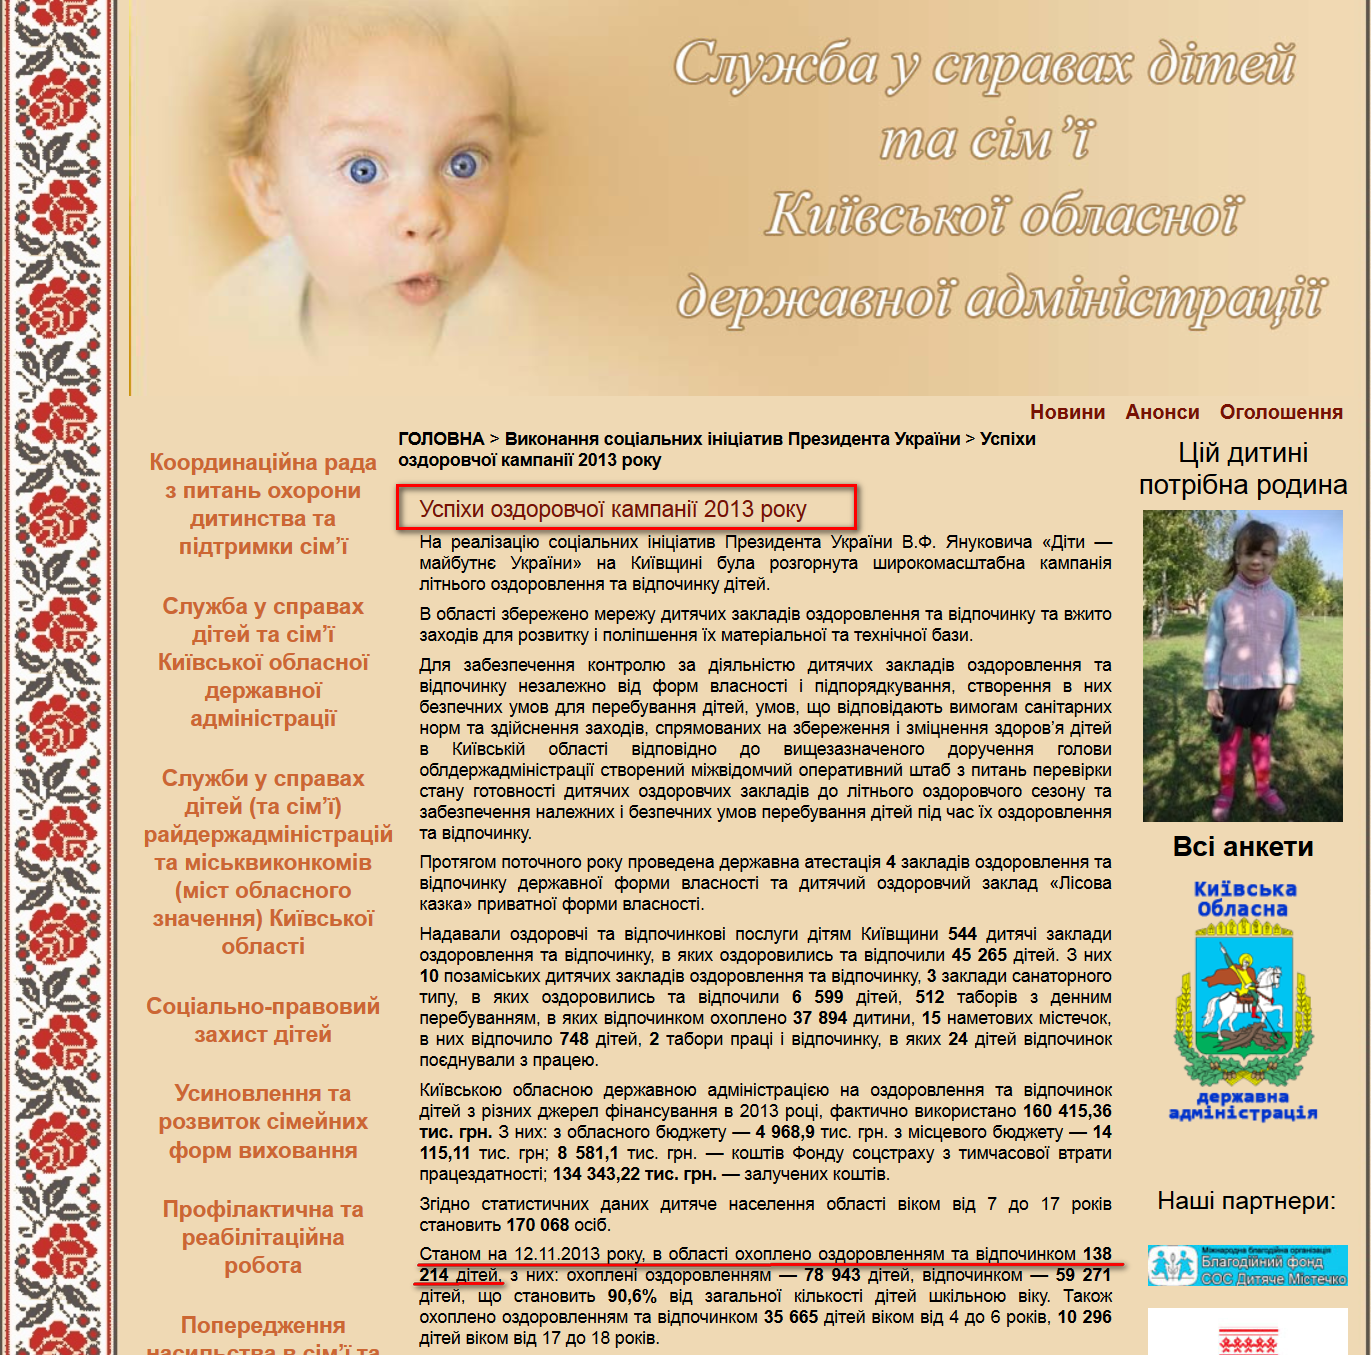 http://ssd-koda.gov.ua/vikonannya-socialnix-iniciativ-prezidenta-ukra%D1%97ni/uspixi-ozdorovcho%D1%97-kampani%D1%97-2013-roku/